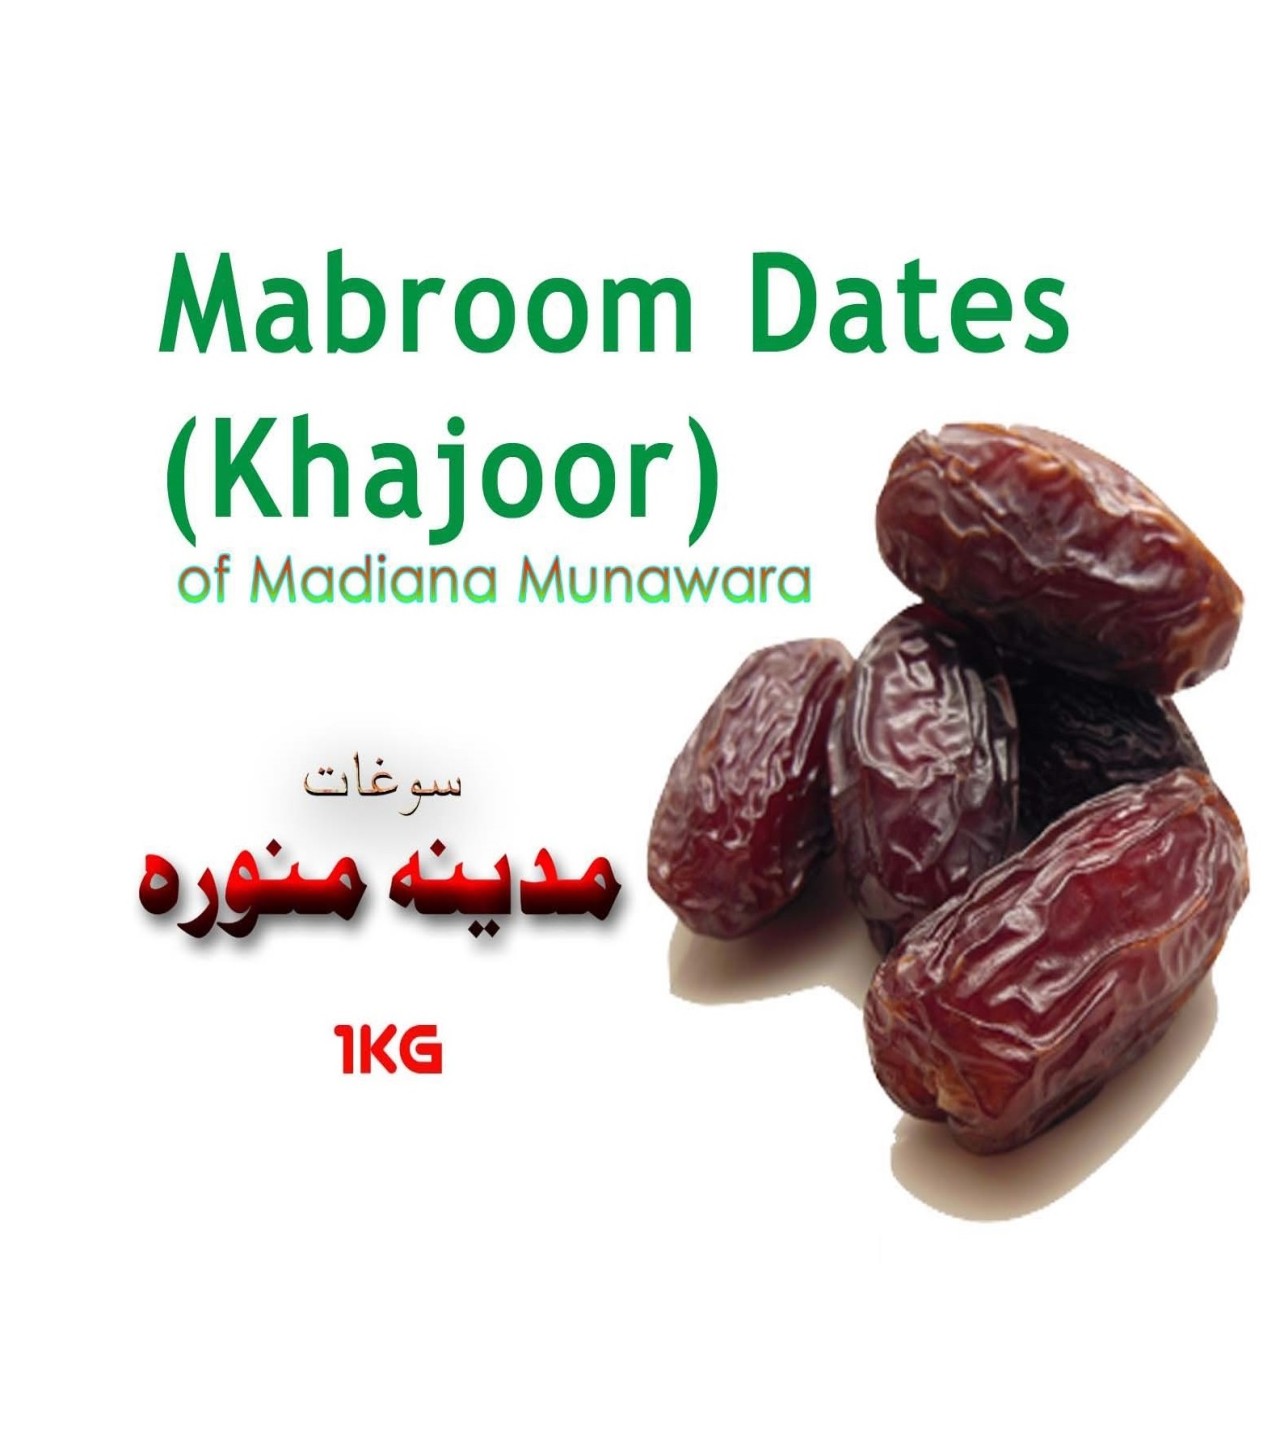 Mabroom Dates - Mabroom Khajoor - Dates - Khajoor - Buy Premium Quality 1 KG Mabroom Dates